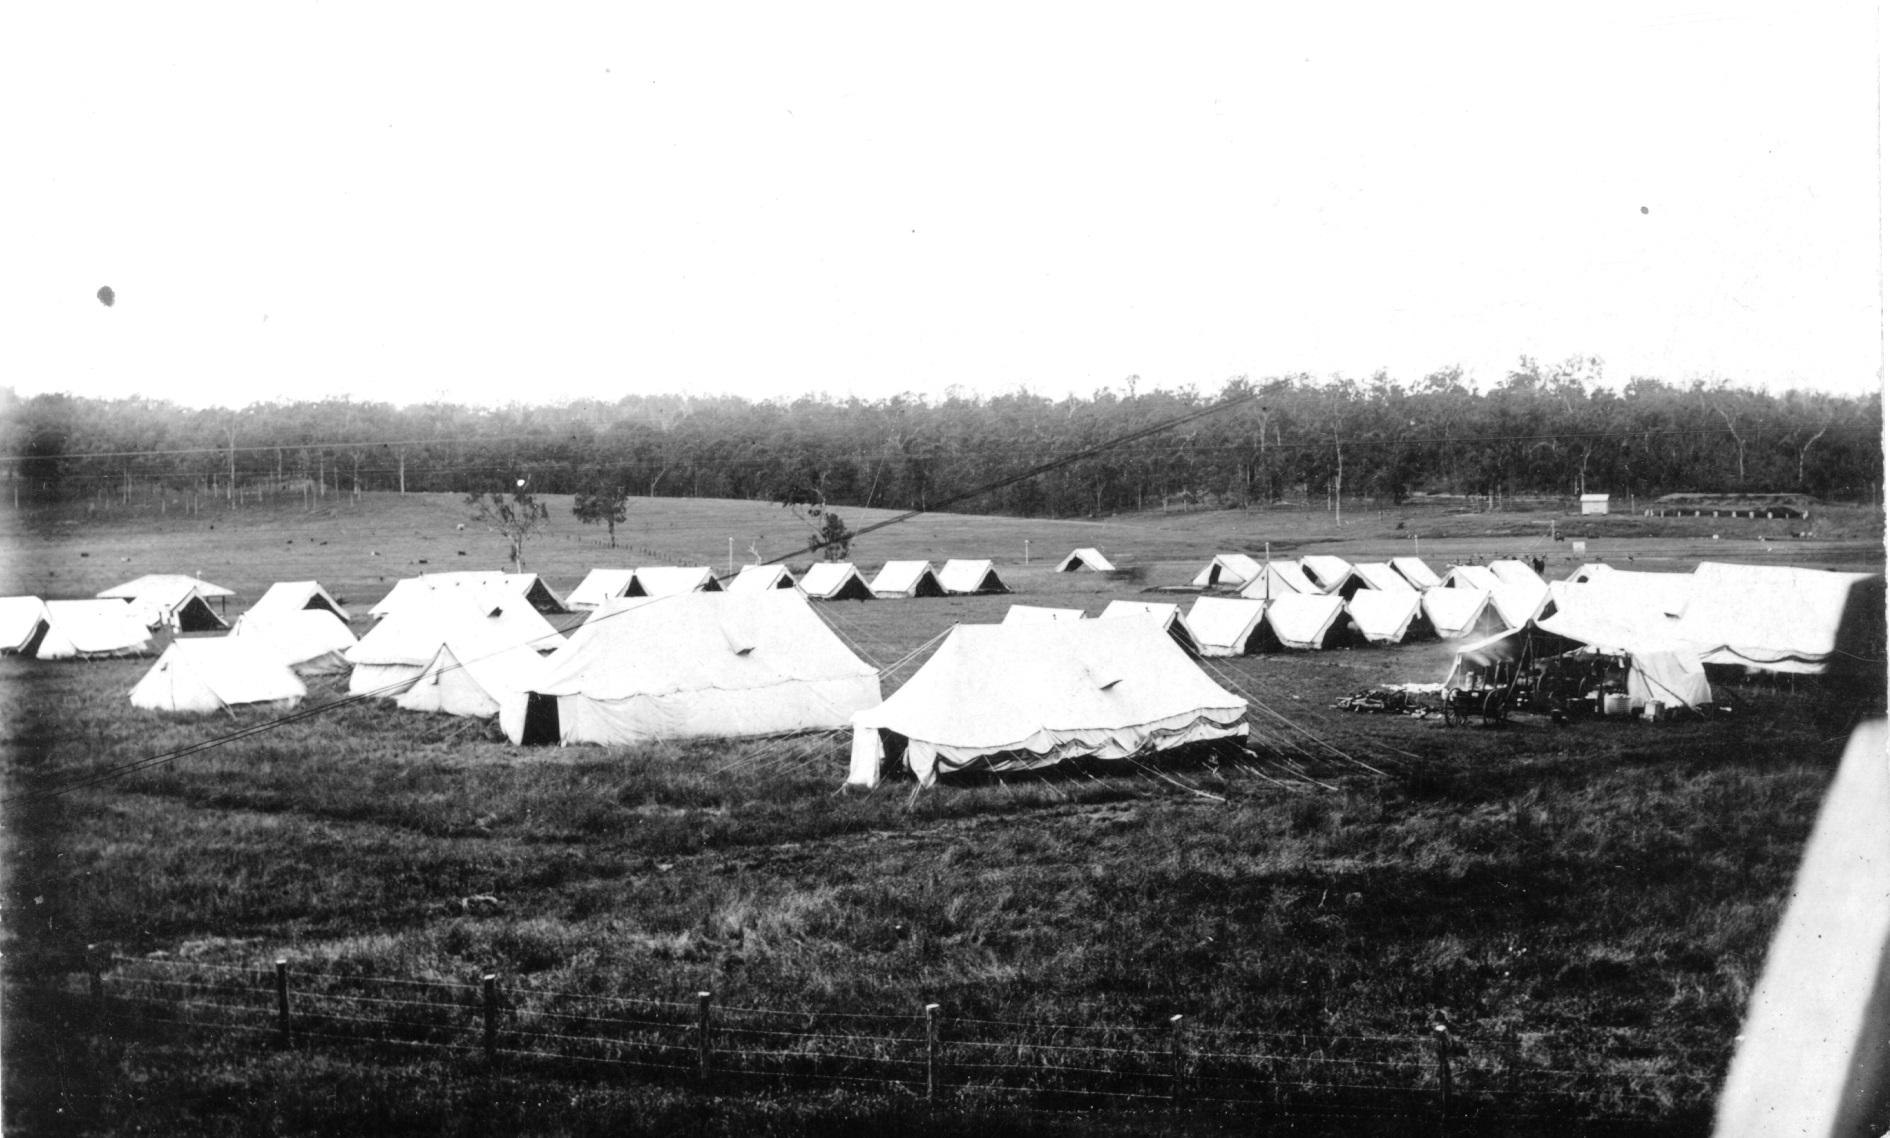 Tents up on Redbank range